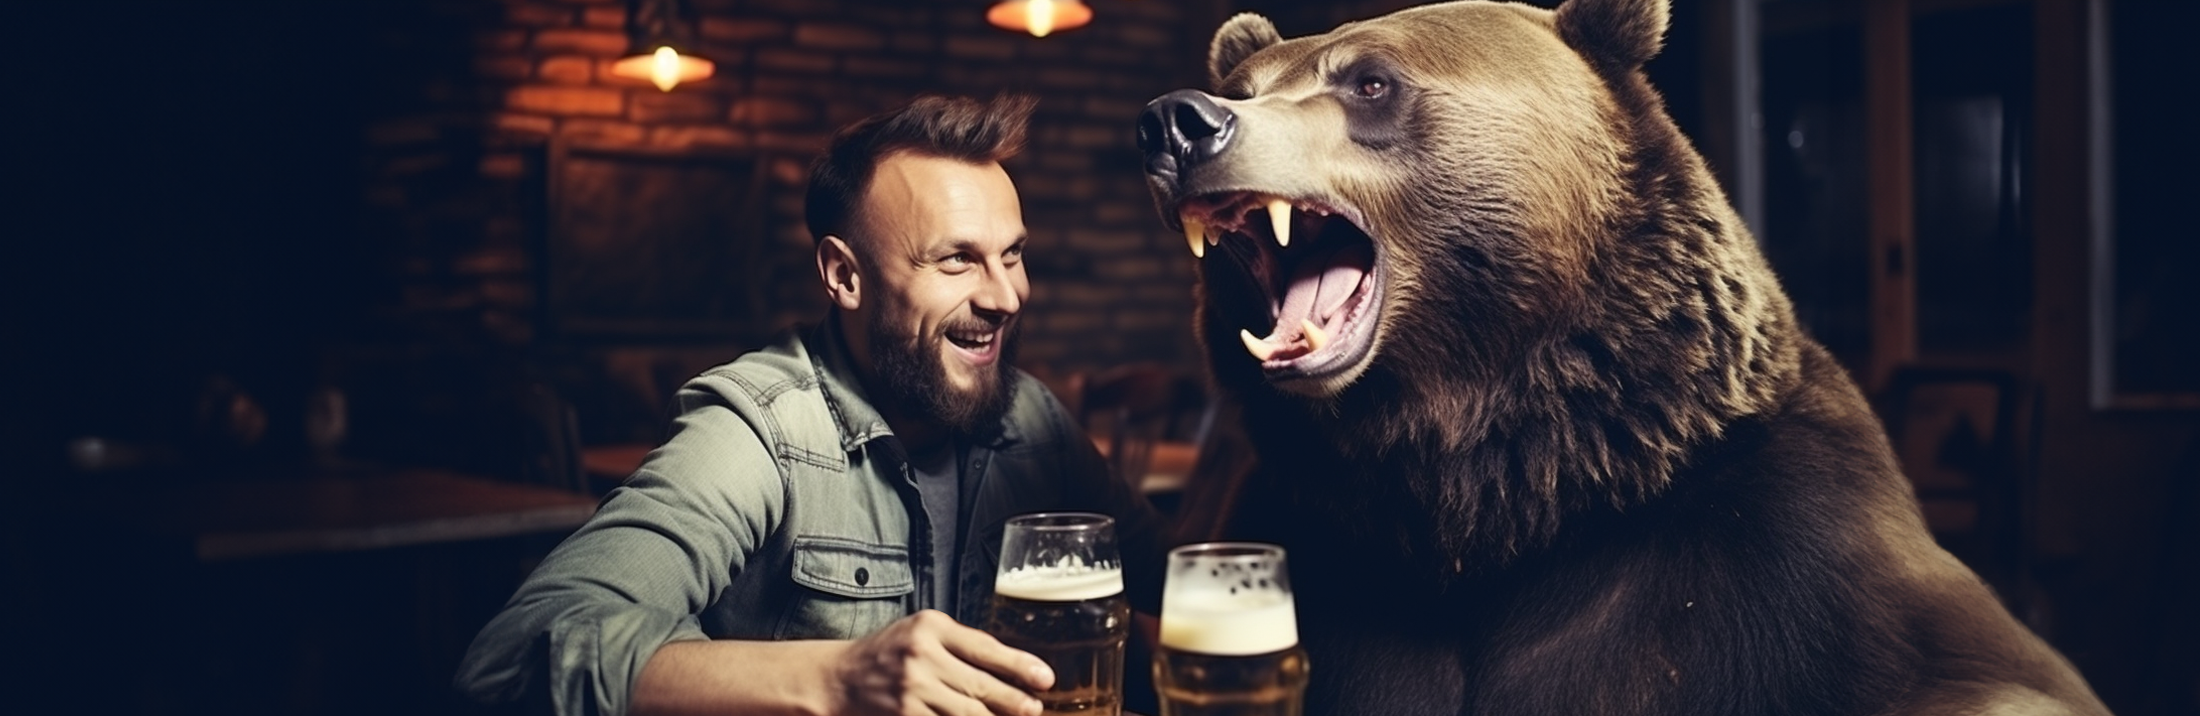 Mies ja karhu istuu ravintolassa juomassa olutta